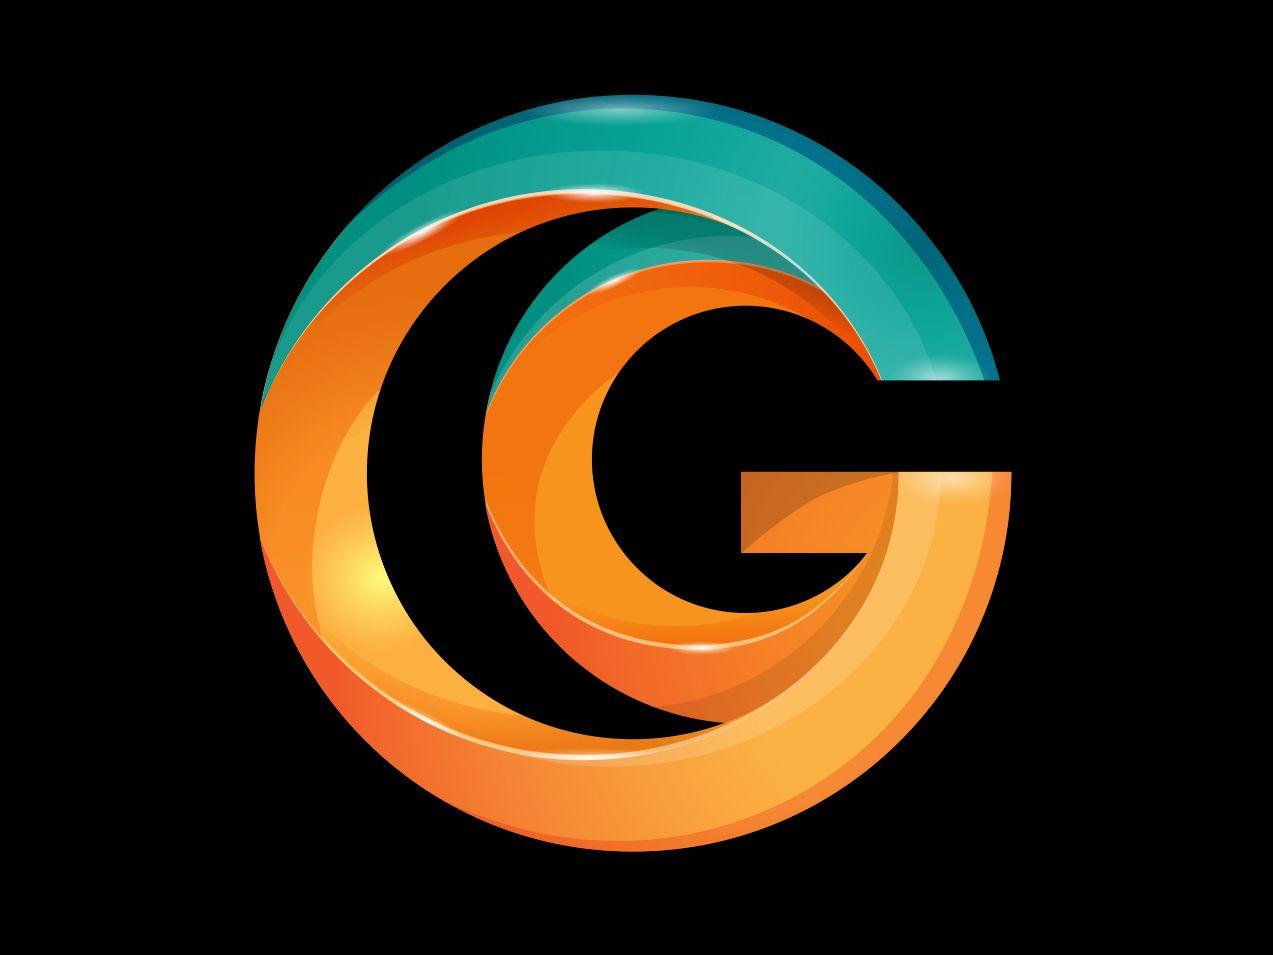 C G Logo - CG Logo Study